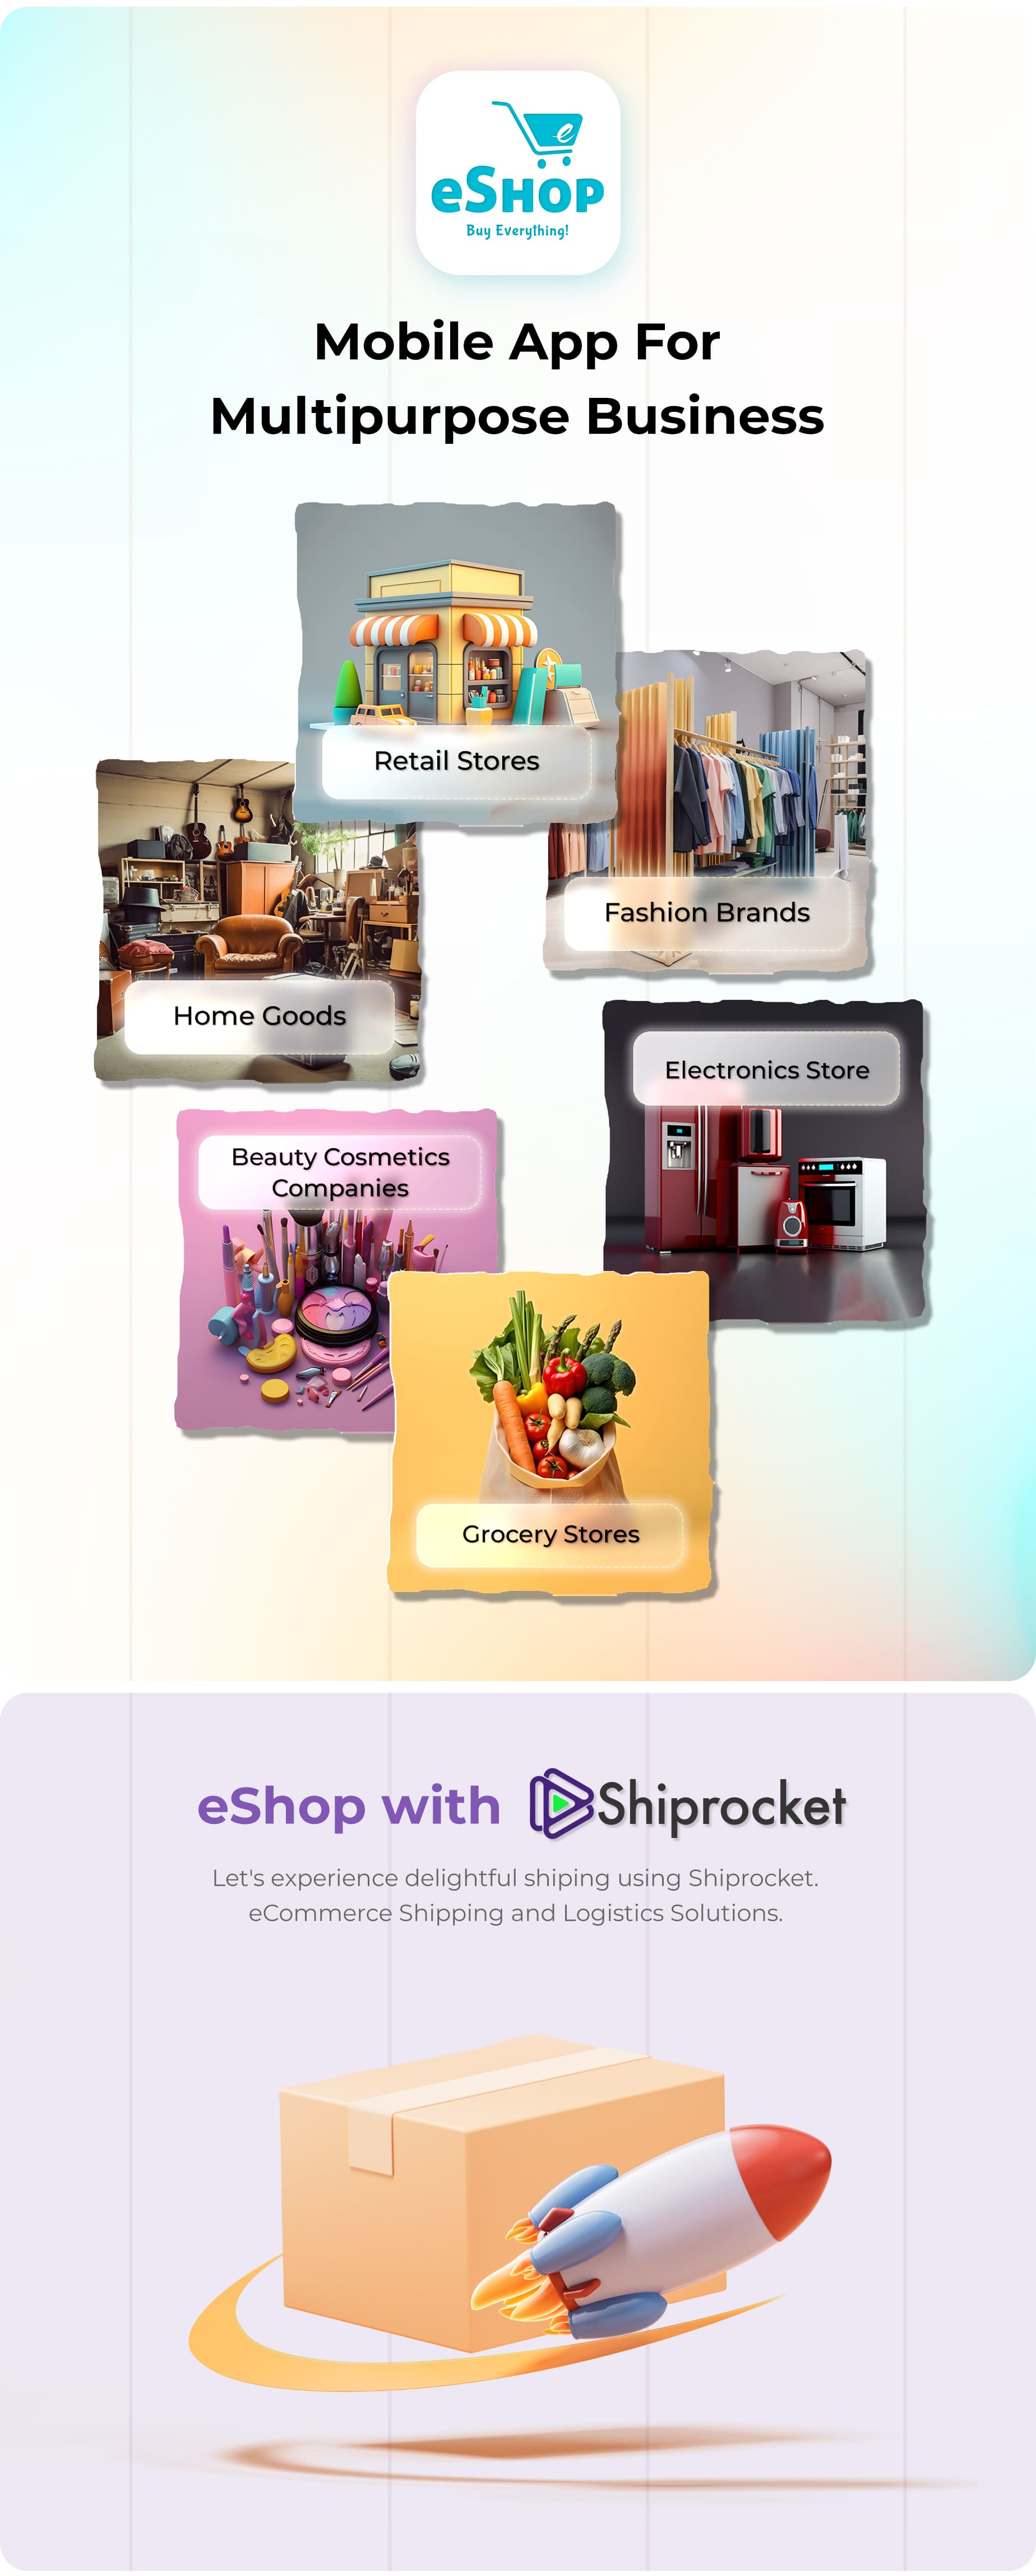 eShop- eCommerce Single Vendor App | Shopping eCommerce App with Flutter - 13